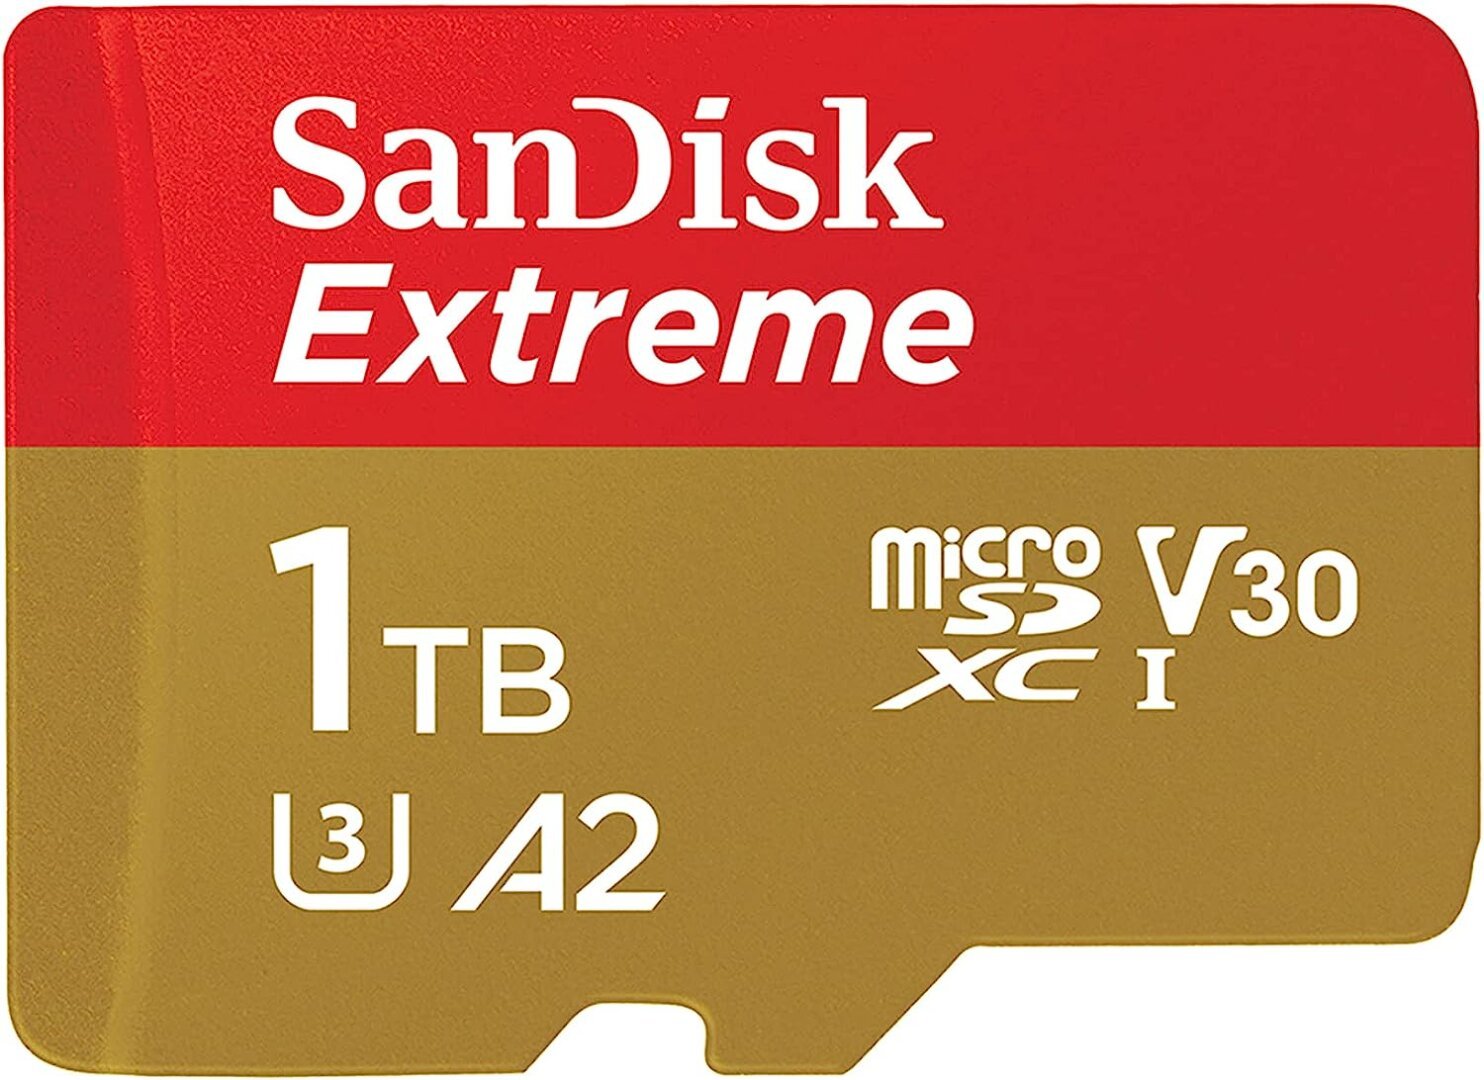 SanDisk 1TB Extreme microSDXC MicroSD Card